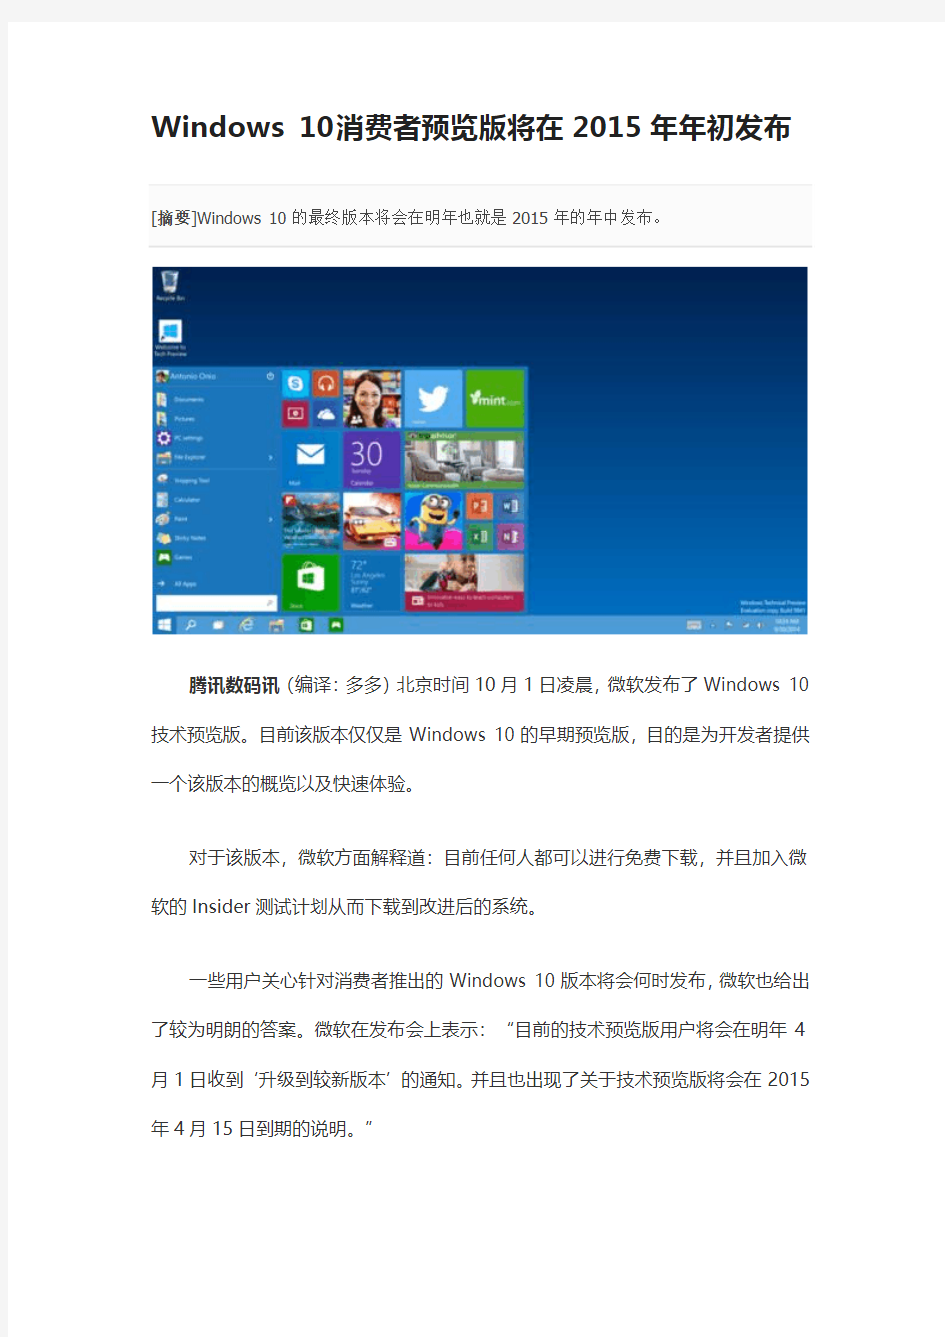 Windows 10消费者预览版将在2015年年初发布